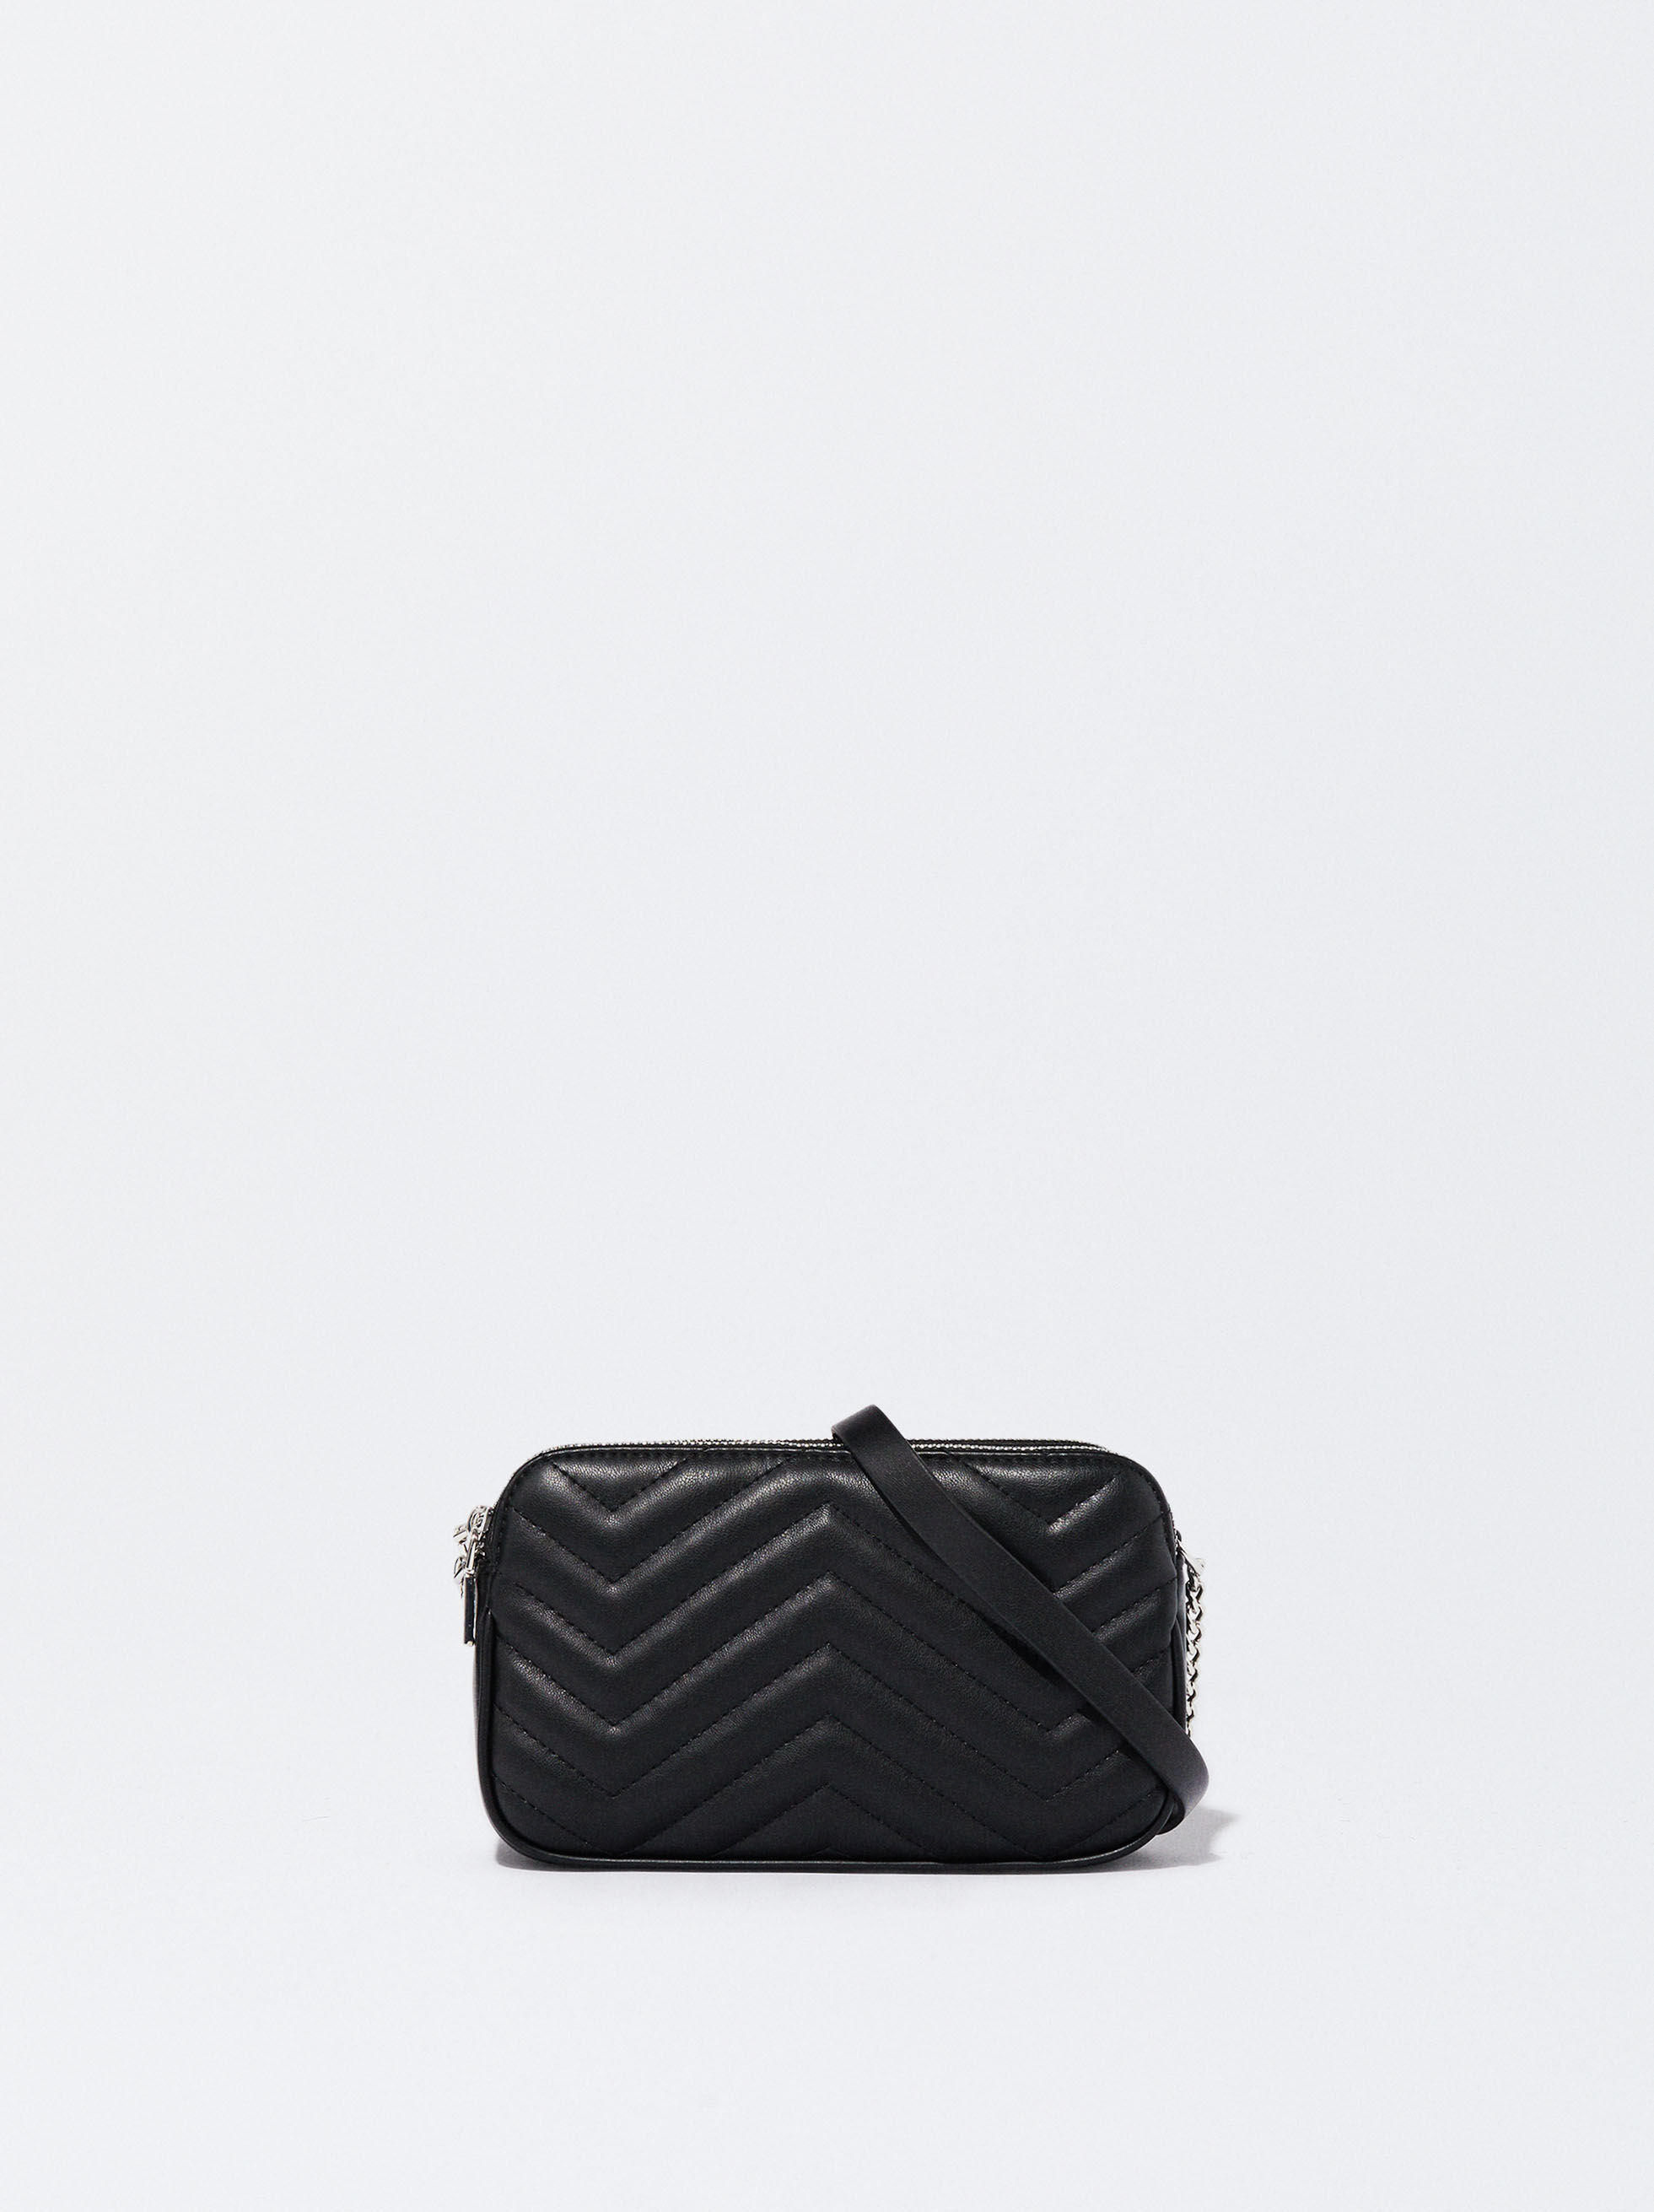 DKNY BODHI CROSSBODY - Handbag - black/silver-coloured/black - Zalando.de